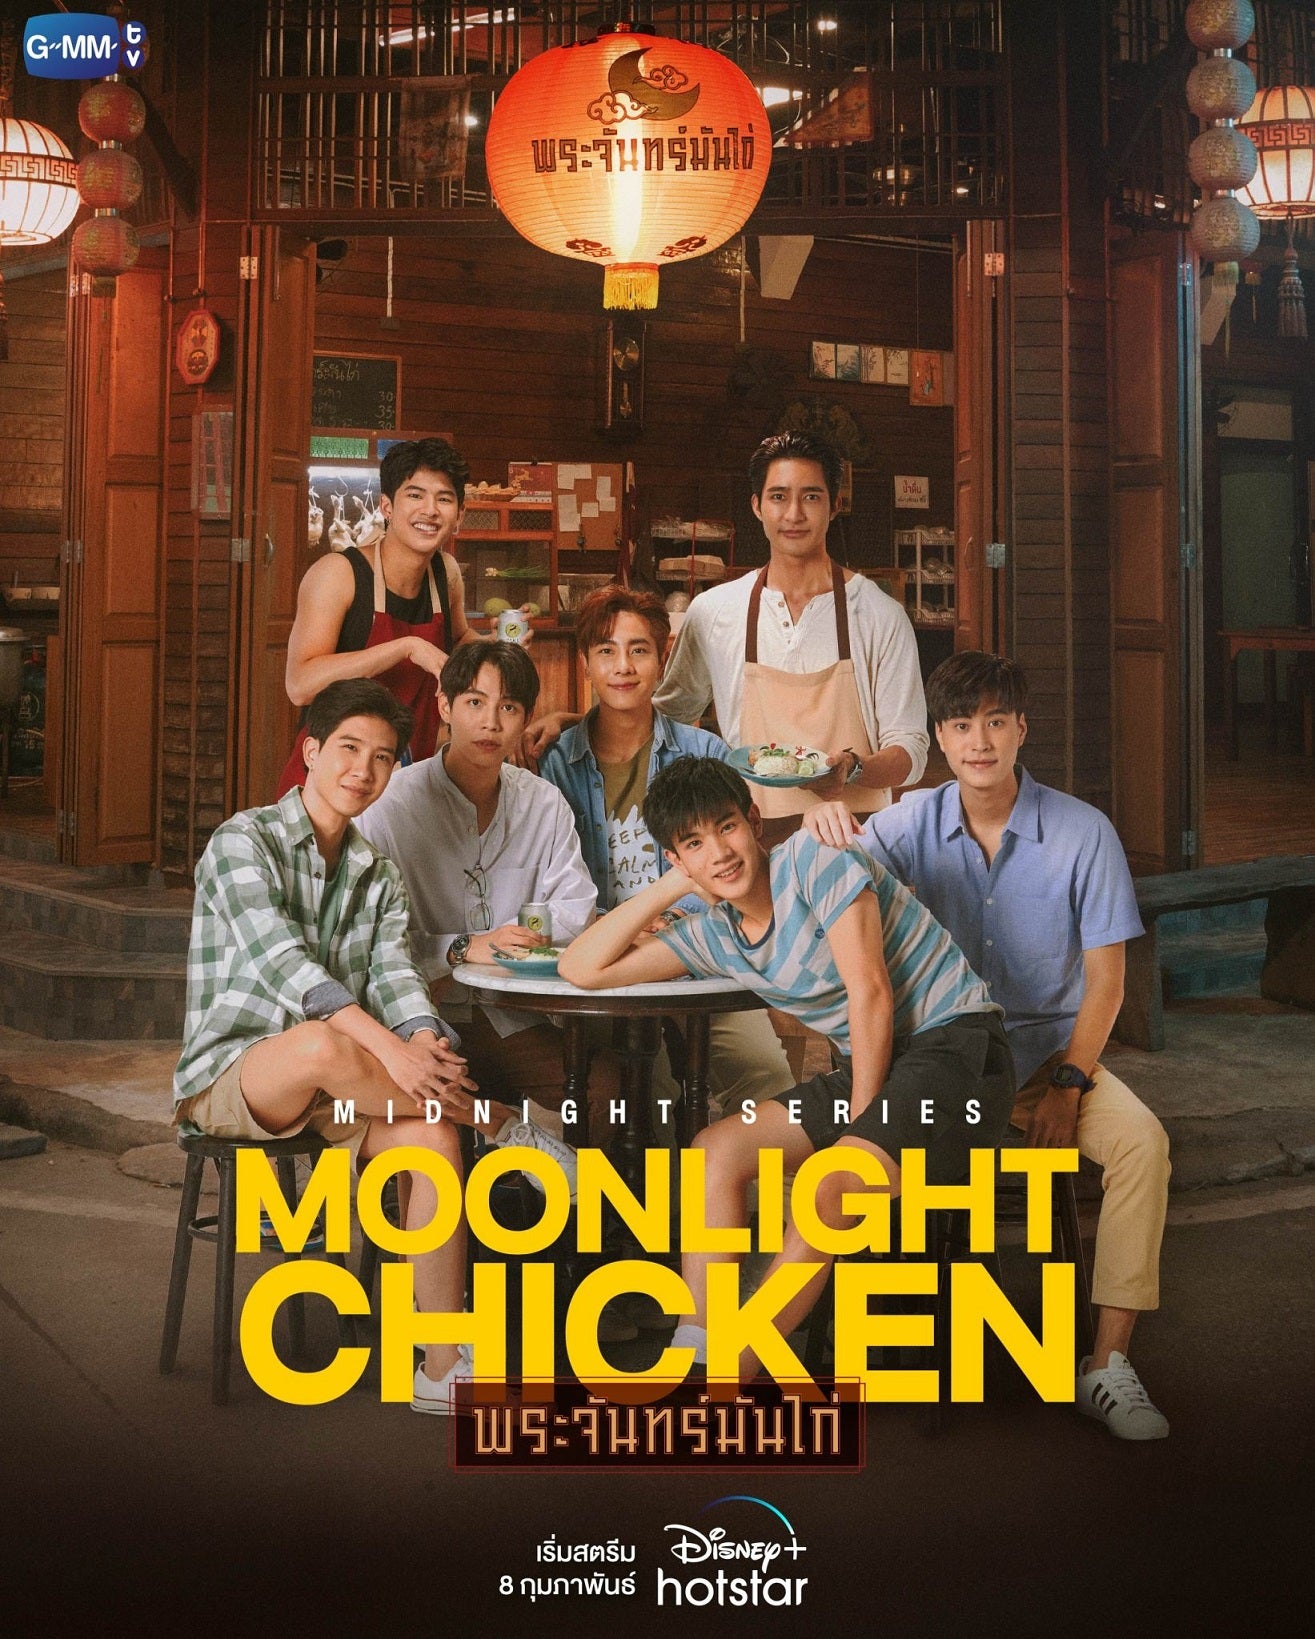 TV ratings for Moonlight Chicken (Midnight Series : Moonlight Chicken พระจันทร์มันไก่) in Canada. GMM 25 TV series